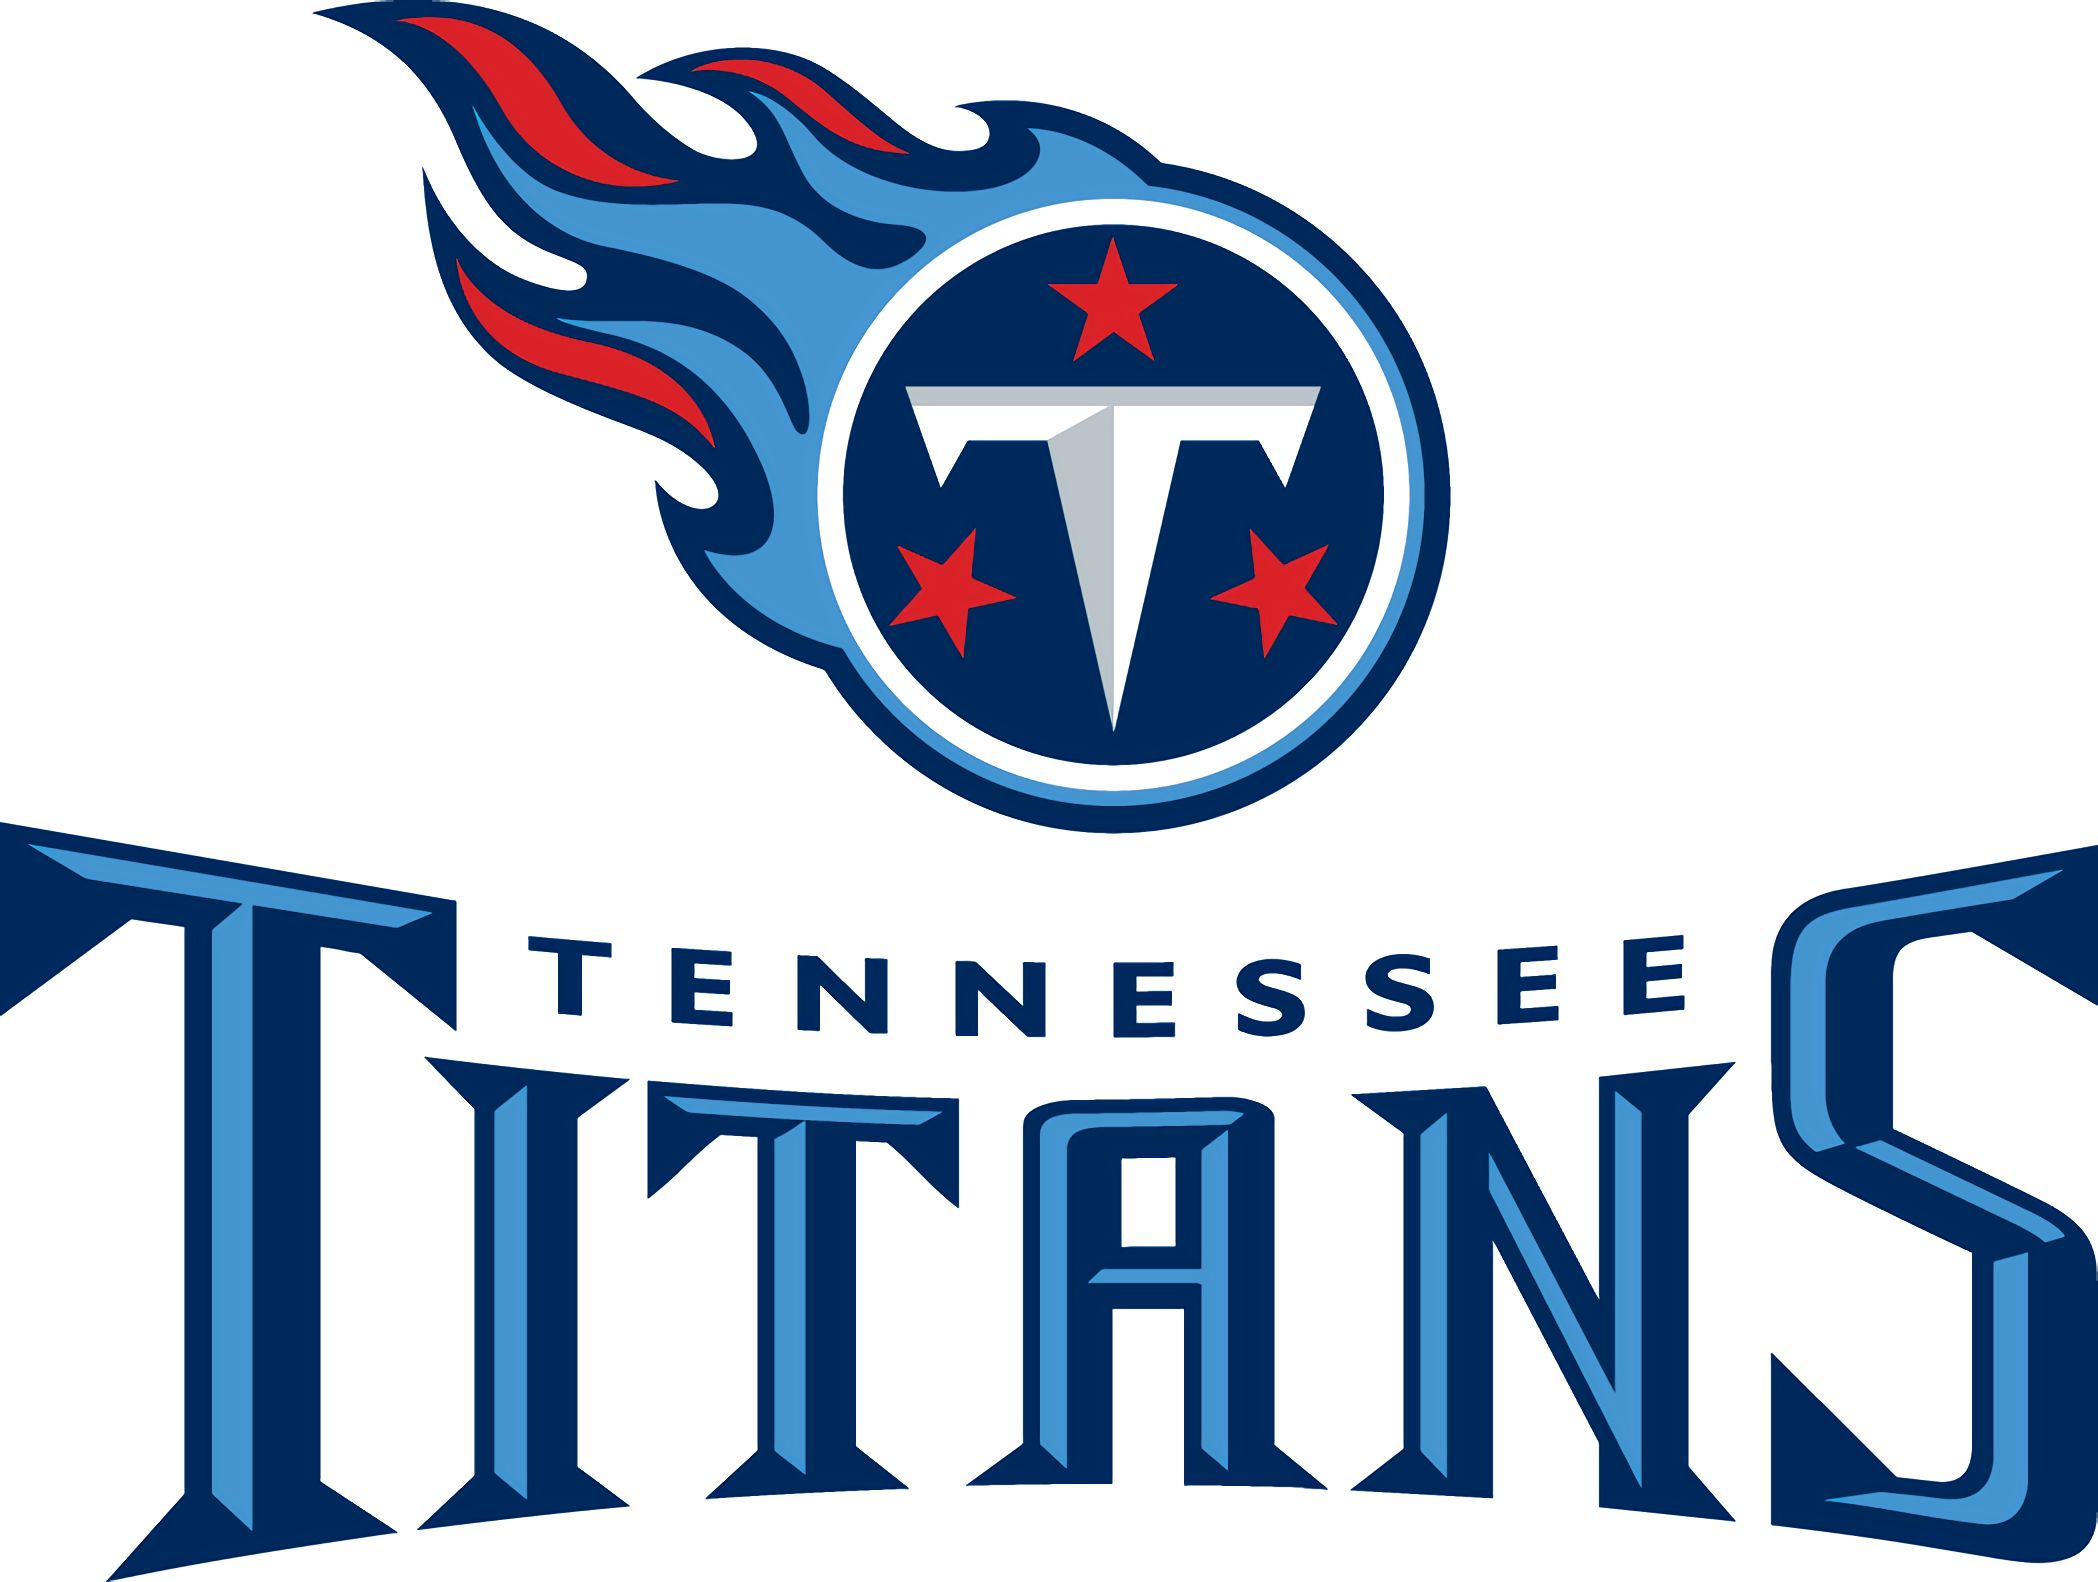 Tennessee Titans: Download 2022 schedule wallpaper for mobile, desktop